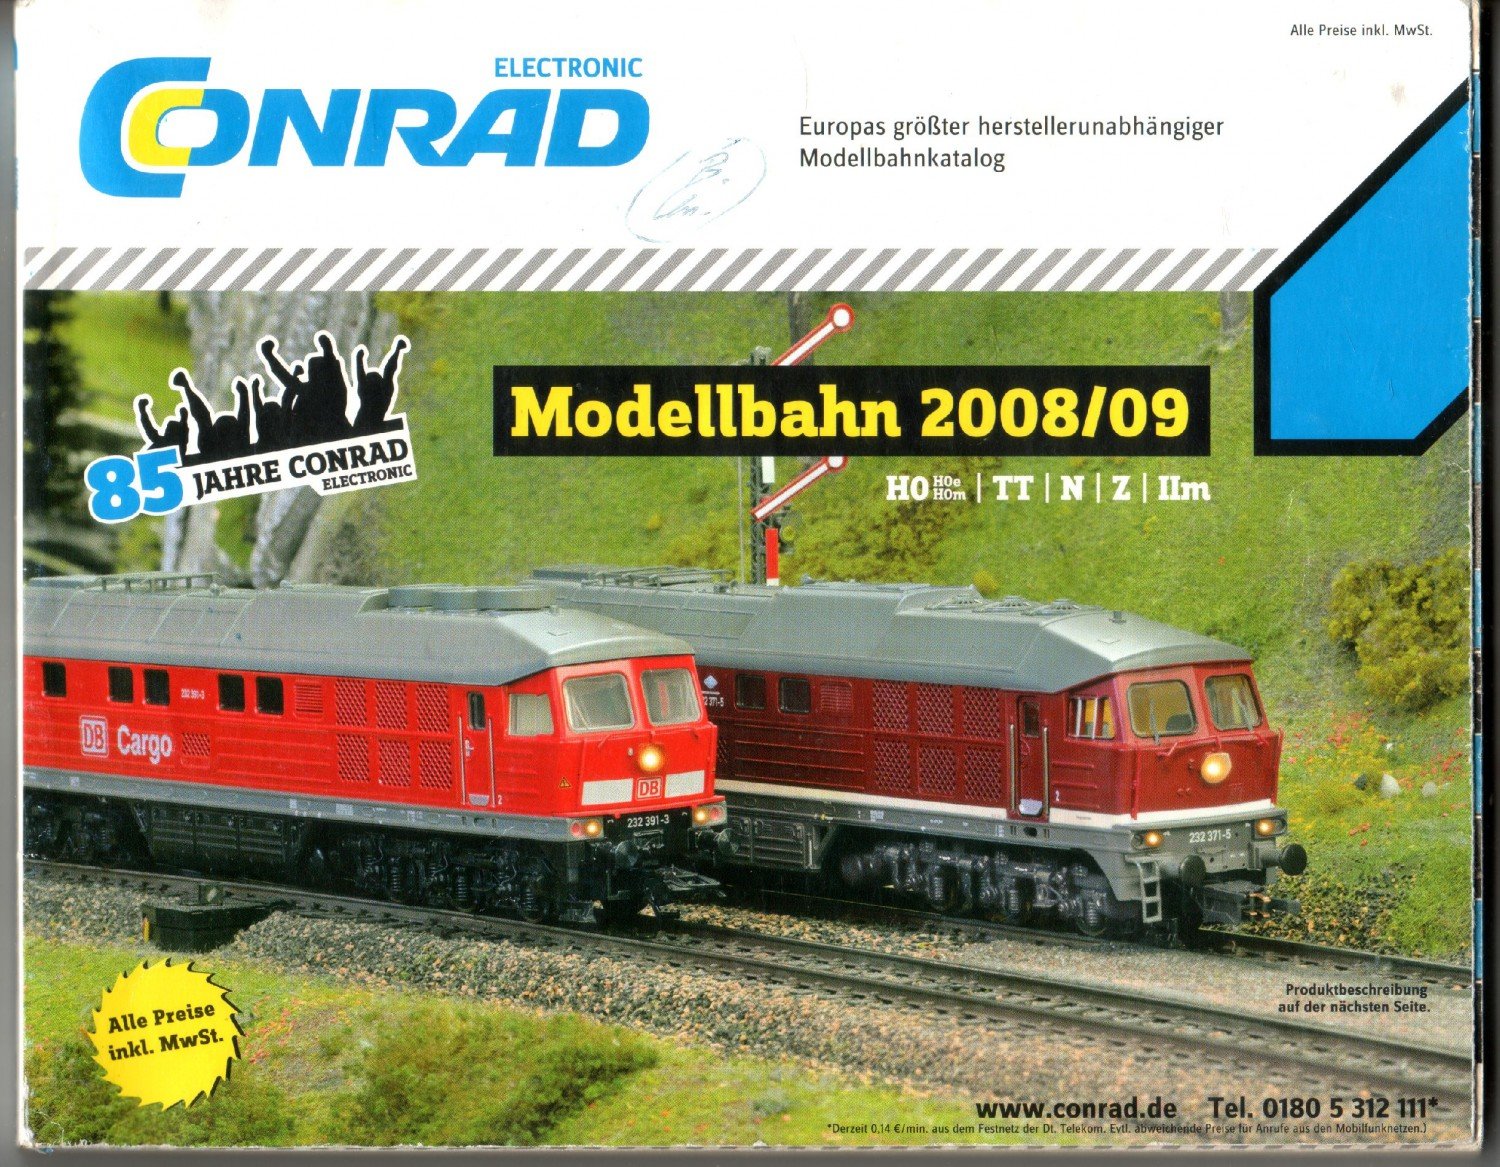 arnold modellbahn katalog pdf to jpg